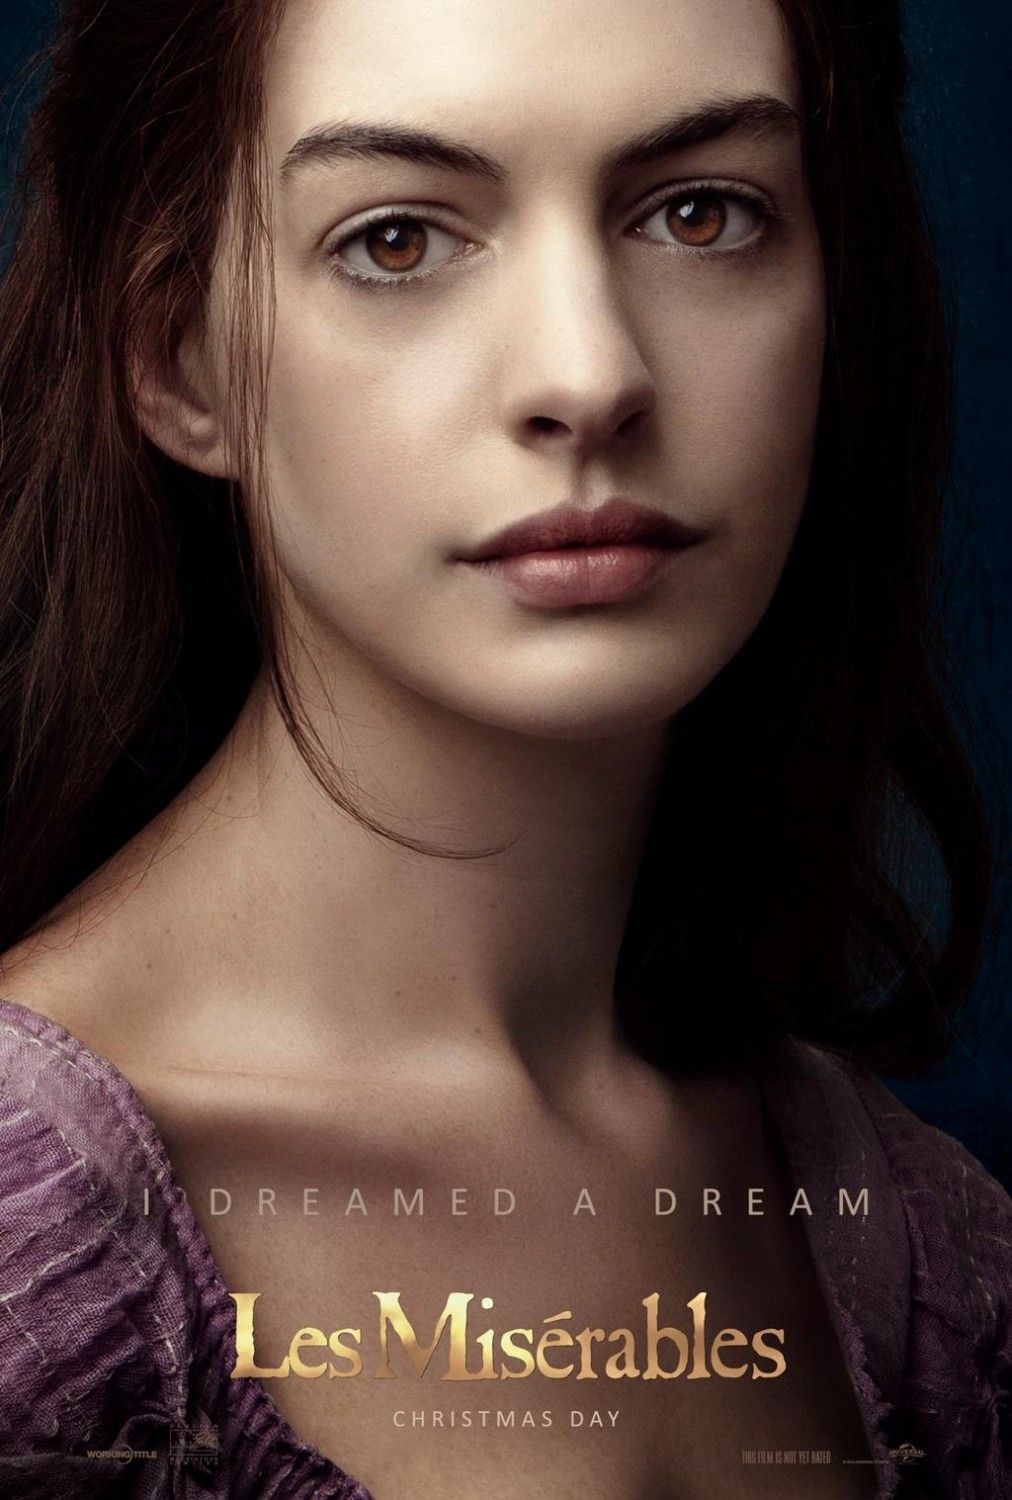 Les Miserables – Anne Hathaway is Fantine 12.25.12